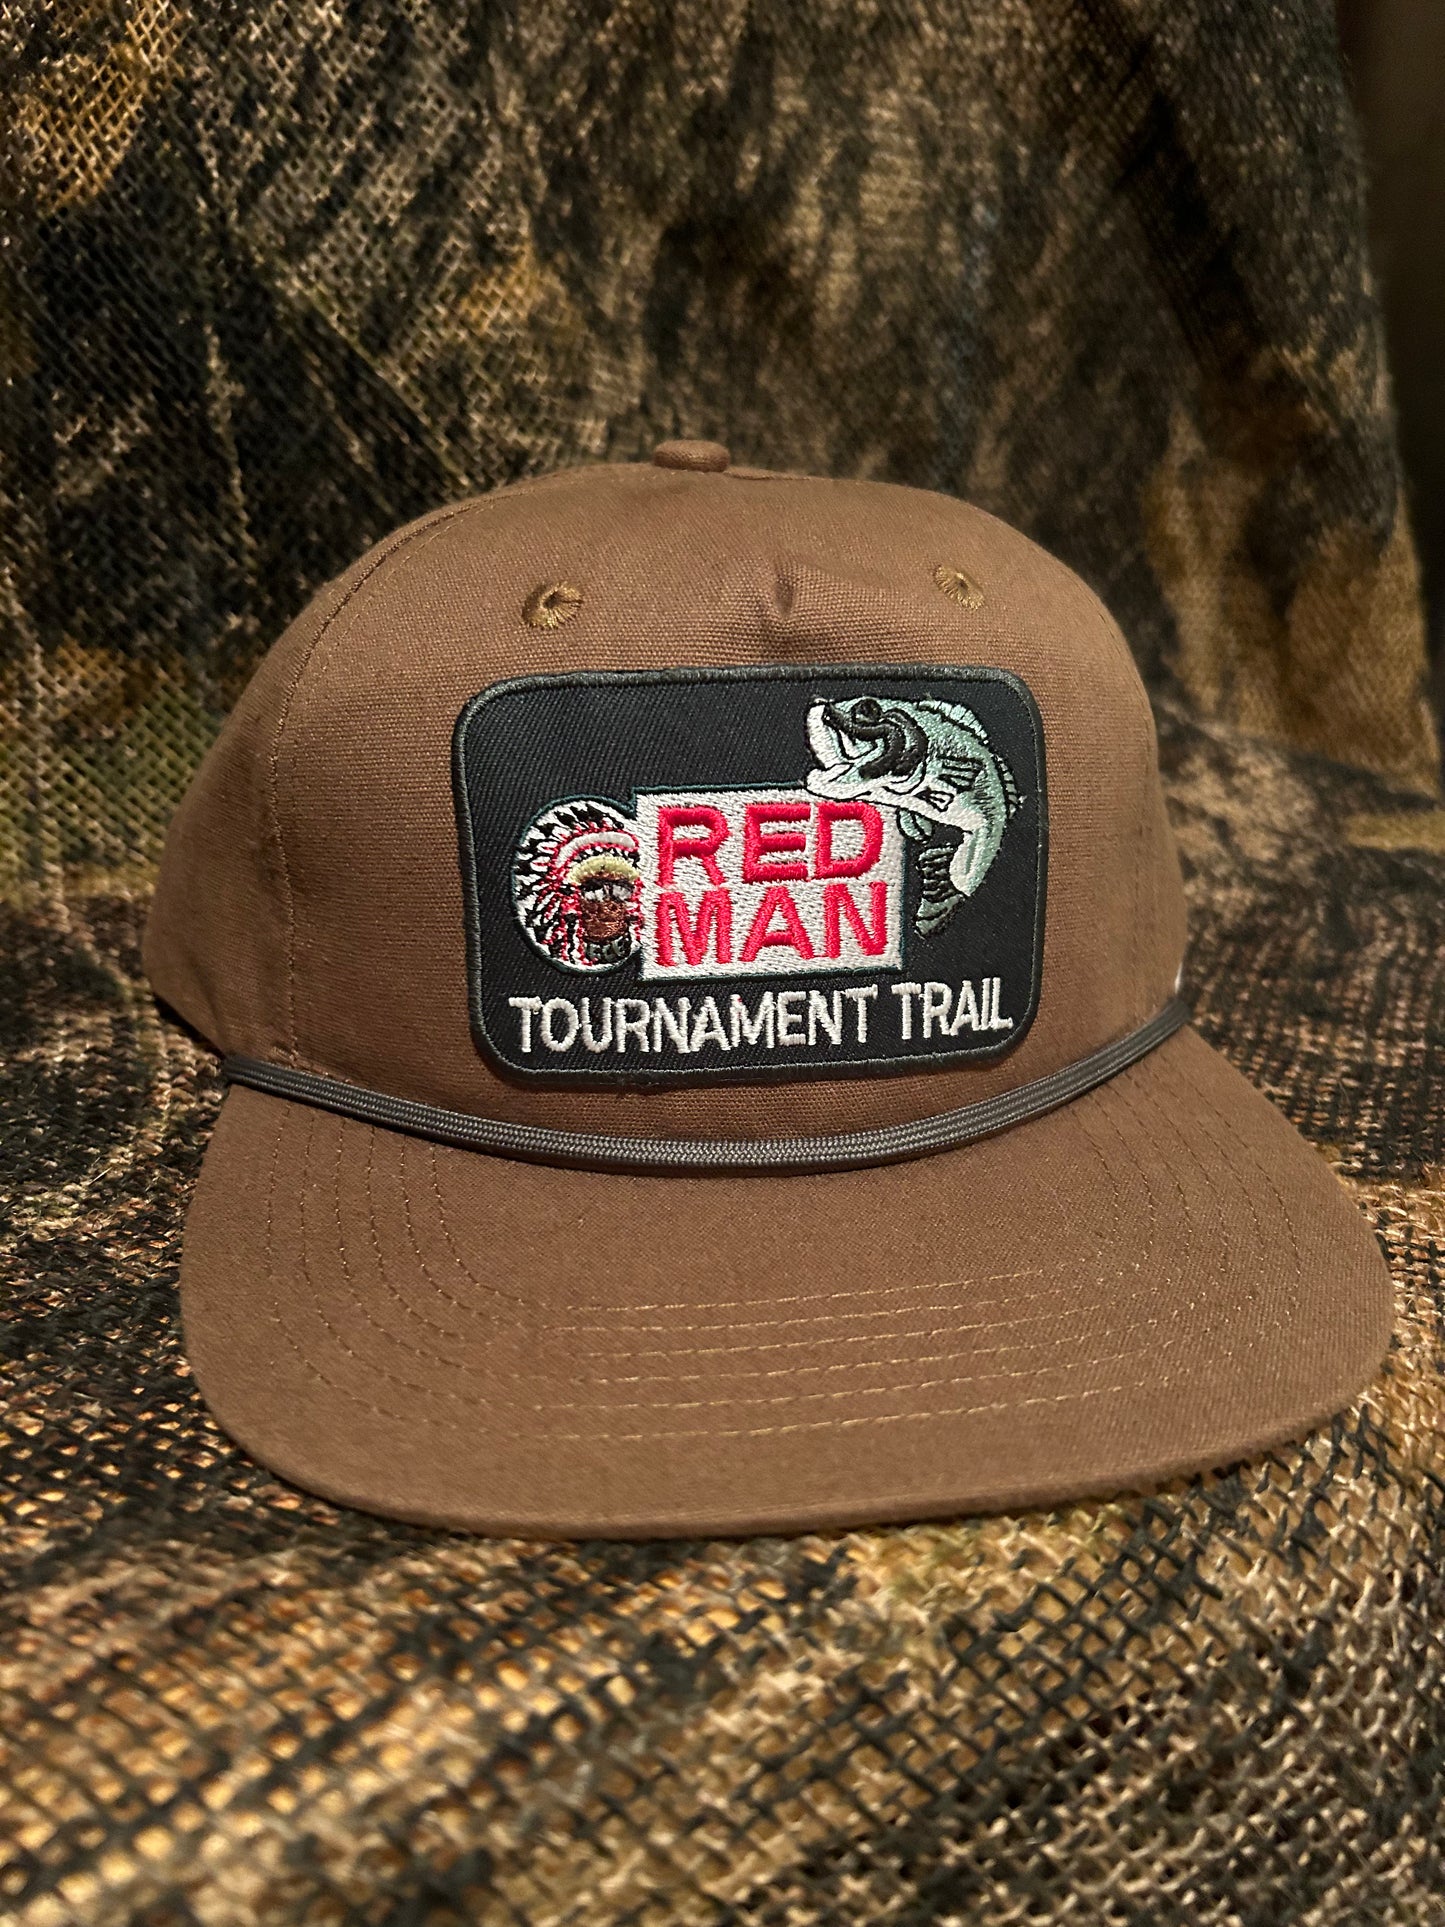 Red Man Tournament Trail retro tobacco brown snapback hat